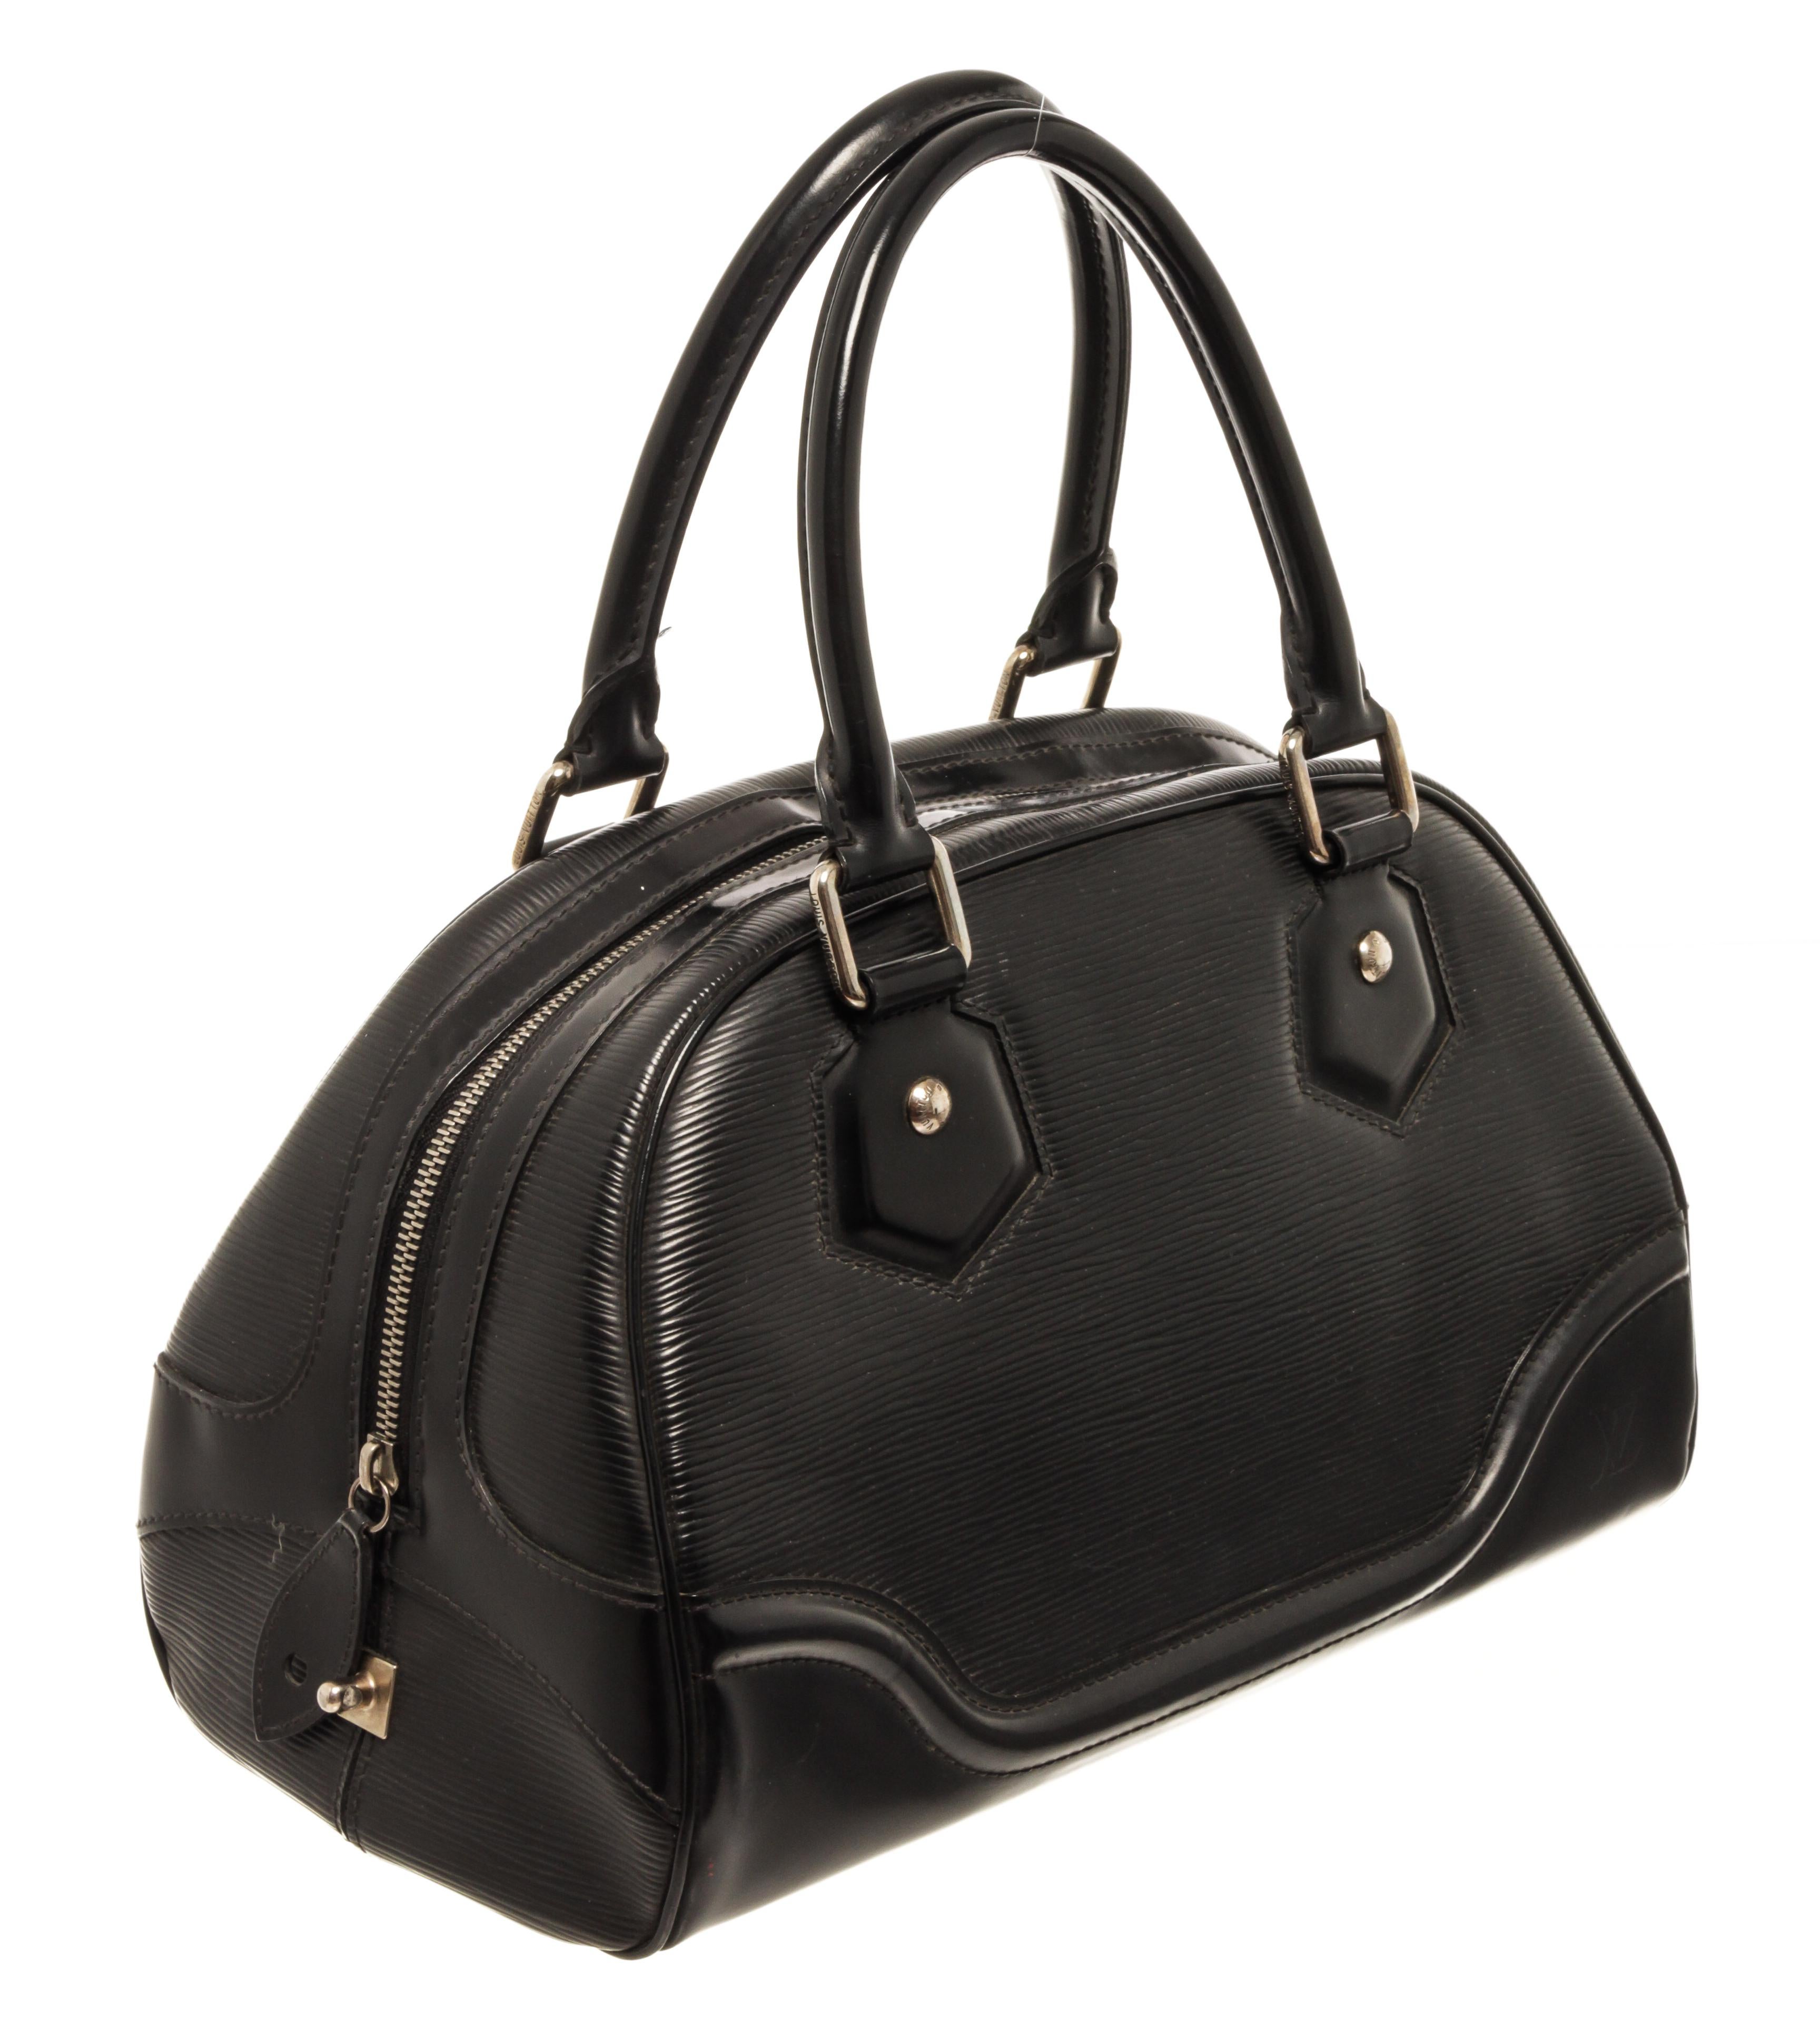 Louis Vuitton Black Epi Leather Bowling Montaigne PM Handbag with silver-tone hardware, epi leather material, slip Interior pocket, dual top handle bag and zipper closure.

40447MSC